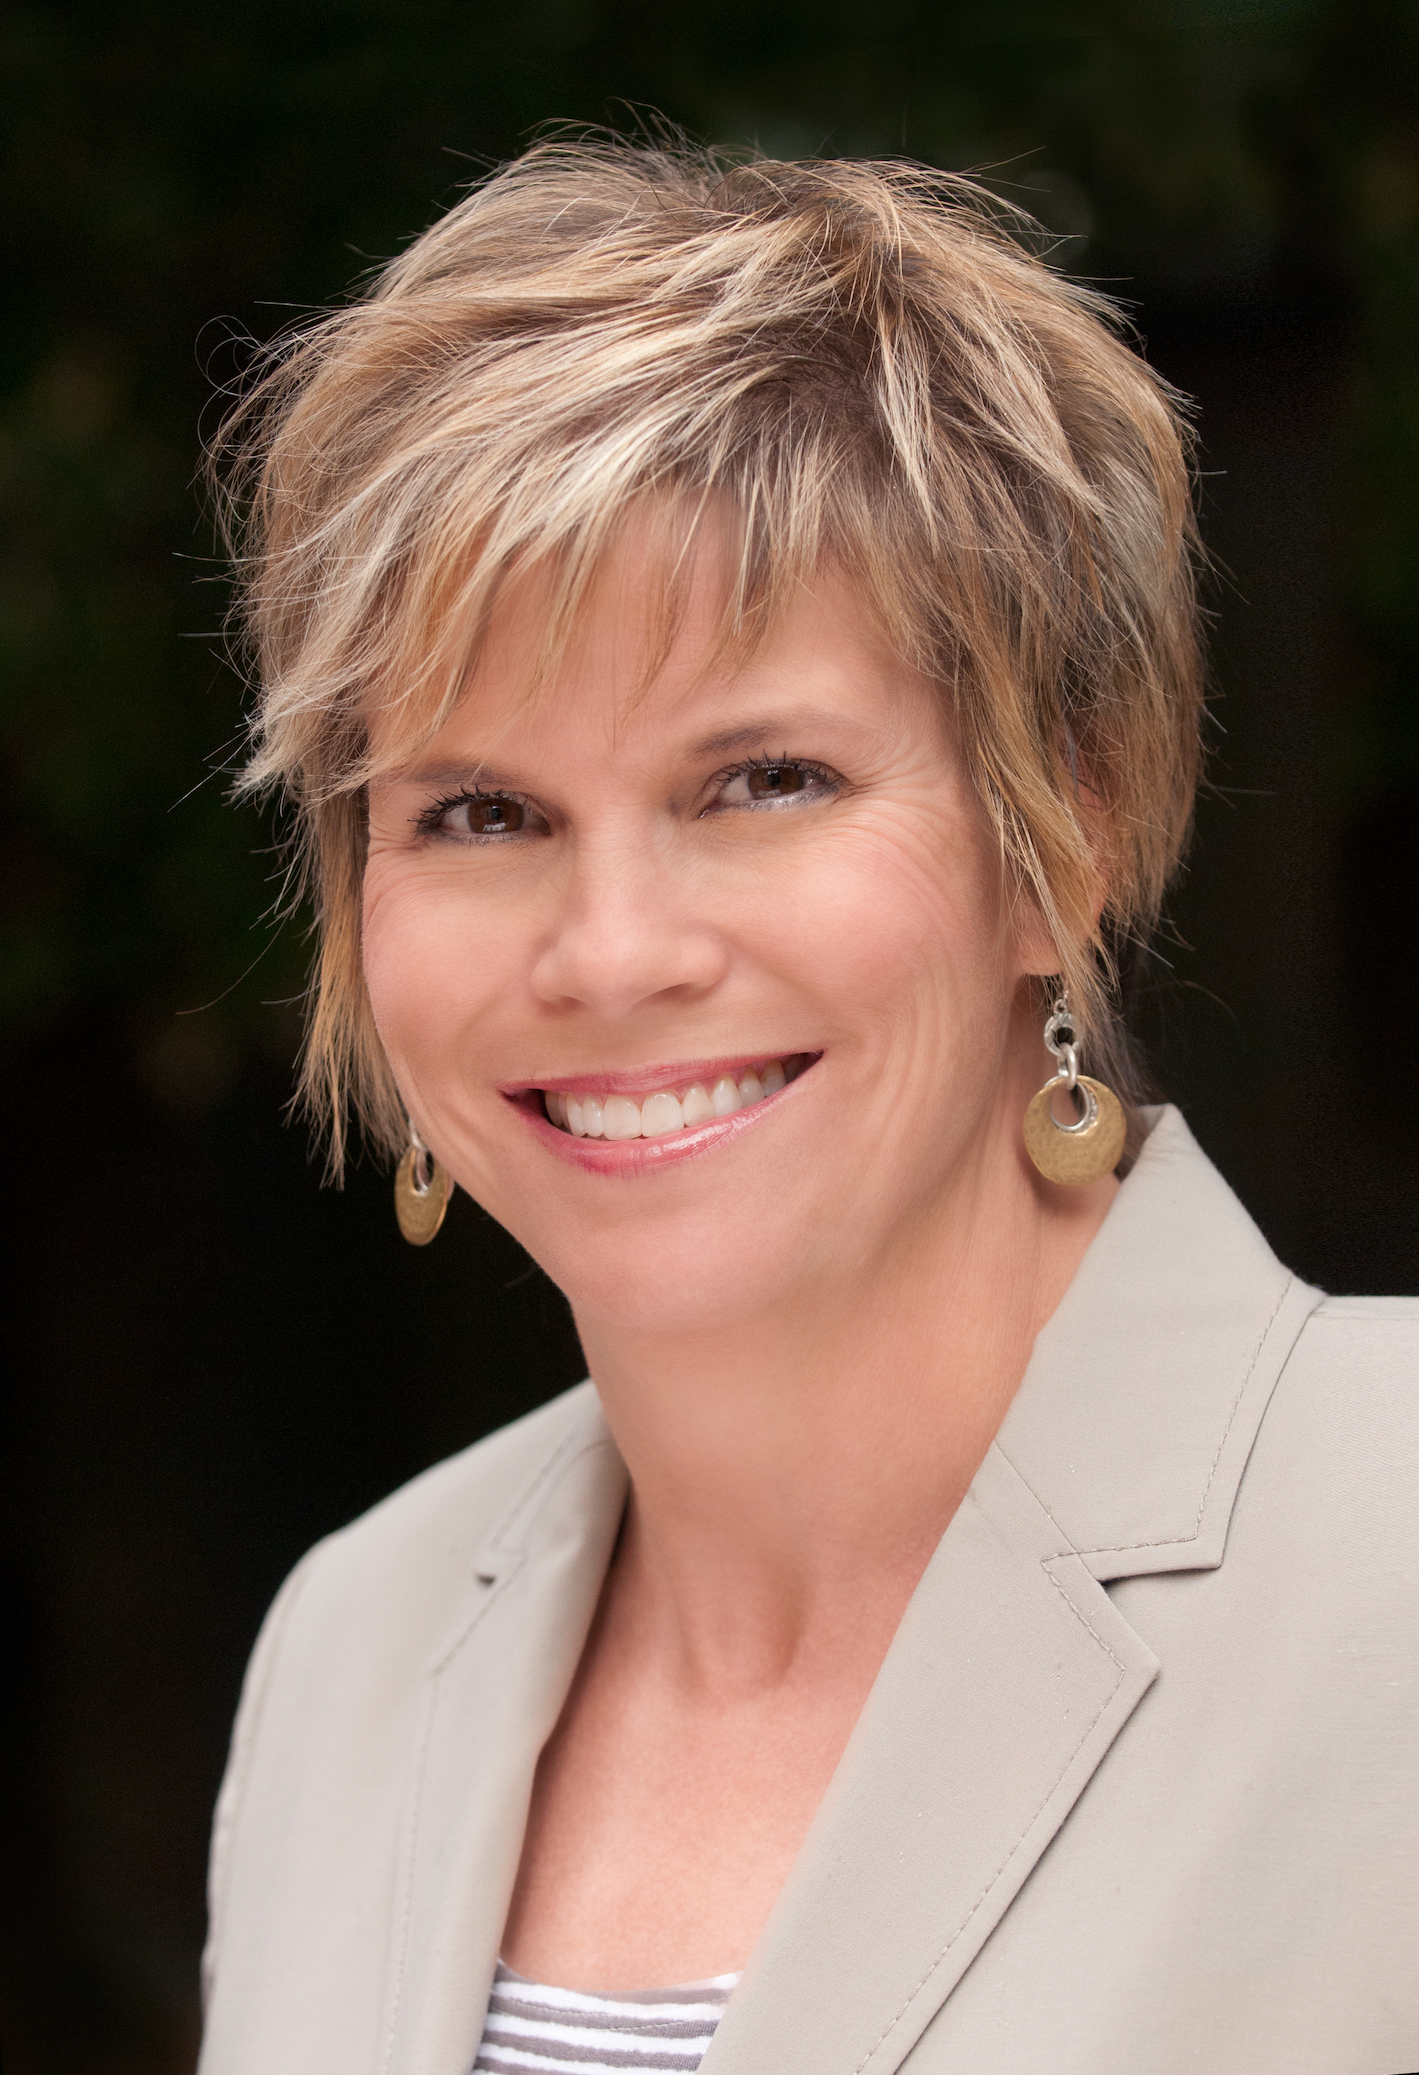 Dr. Allison Waterworth, Psychologist and Evaluator